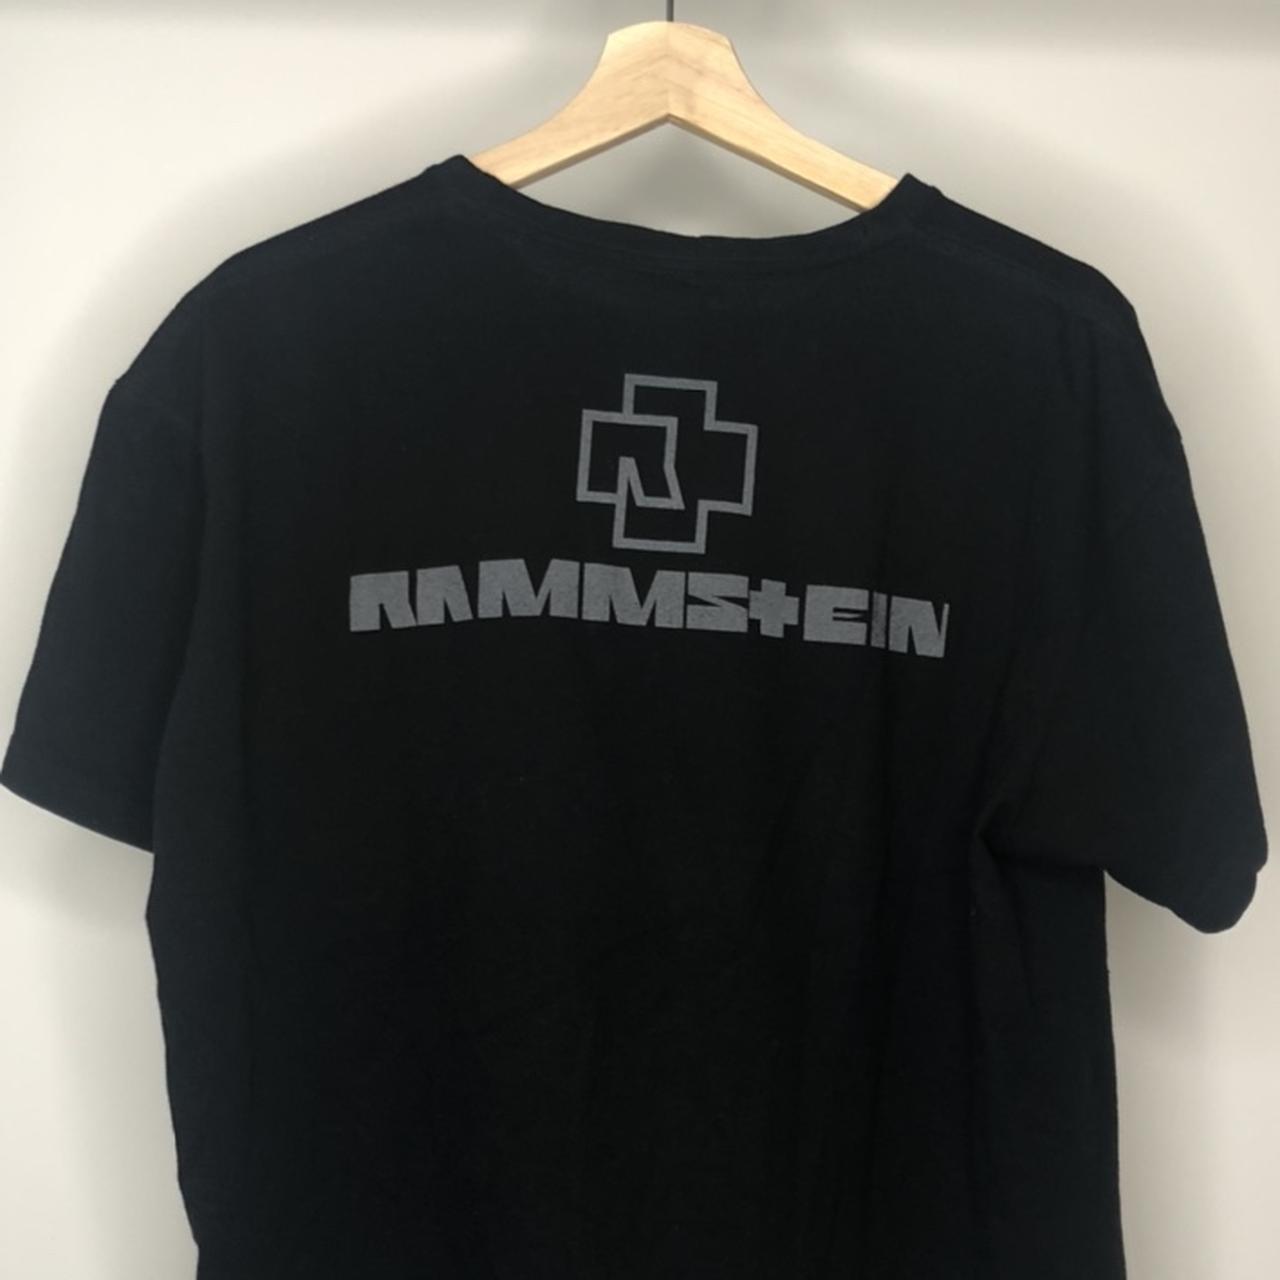 Vintage Rammstein bootleg band T-shirt with blue - Depop